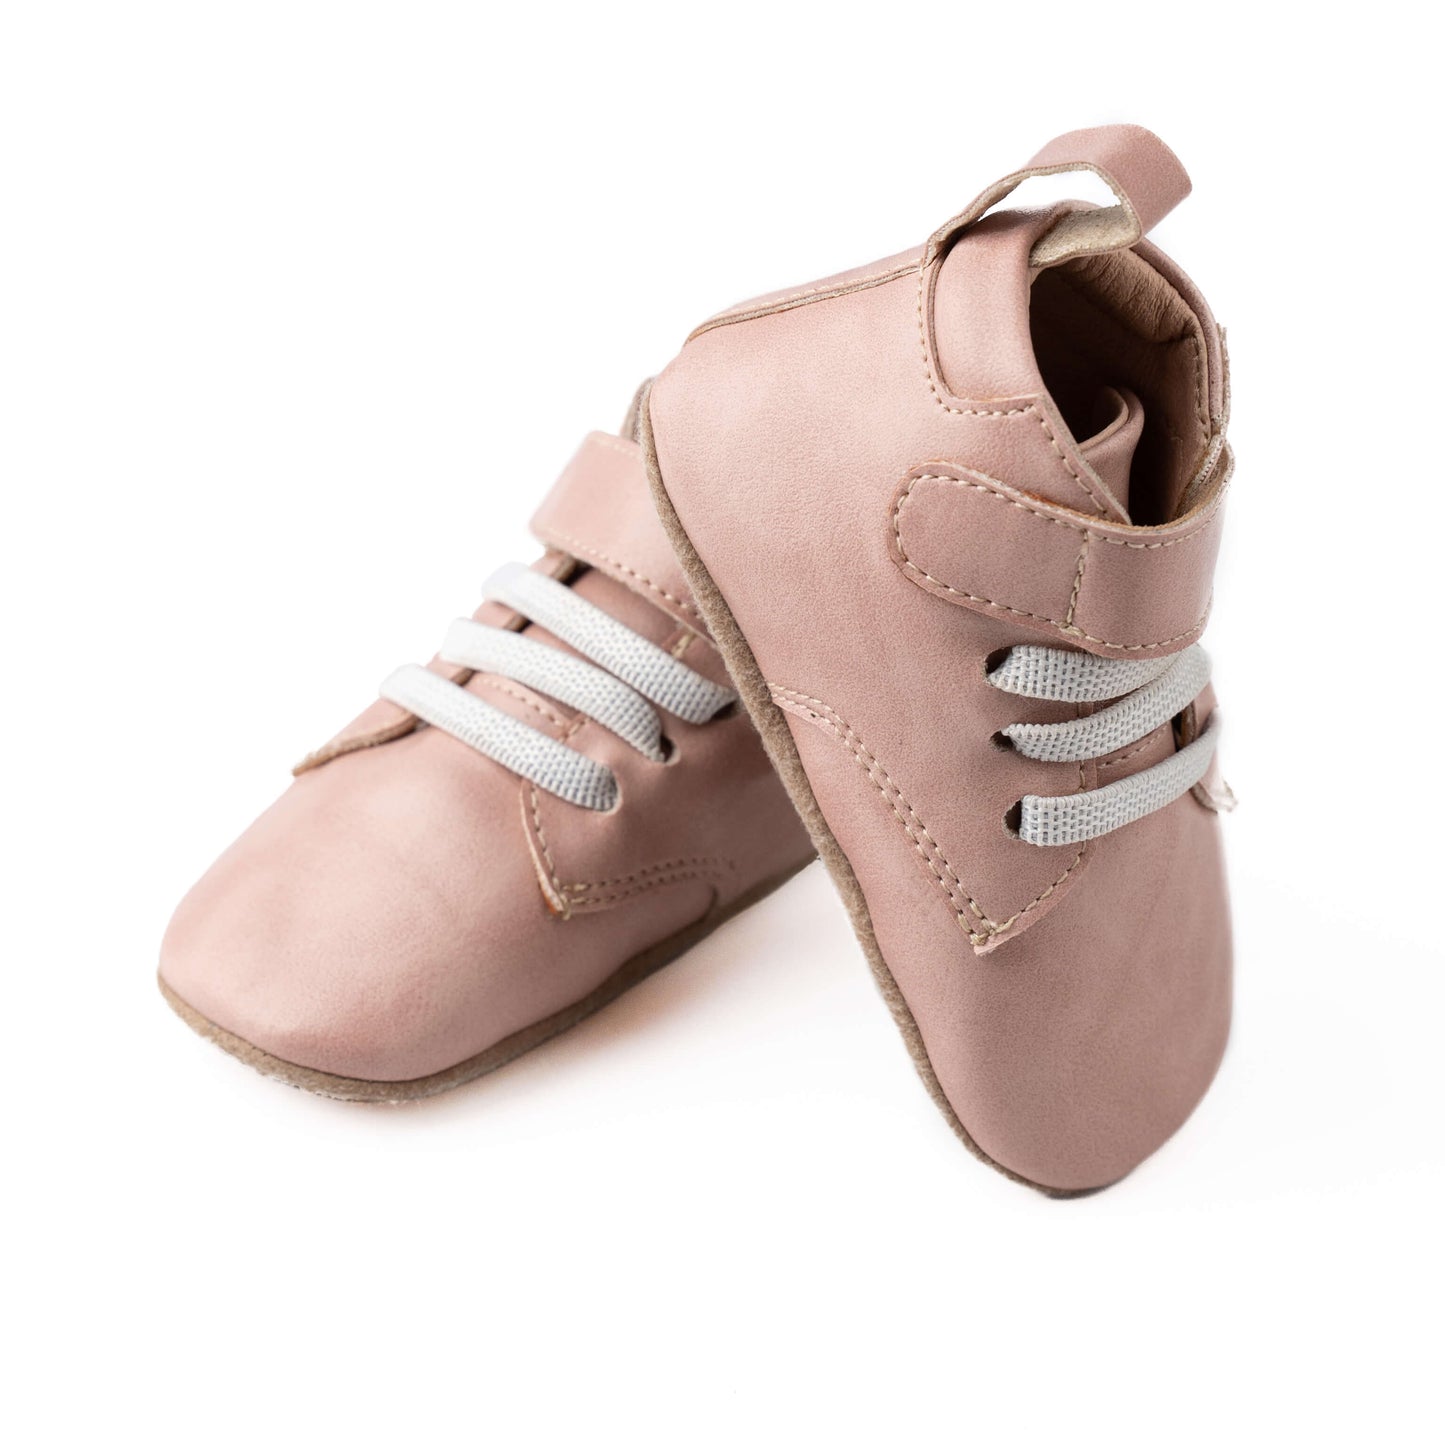 Harper Soft Sole Shoes - Pink